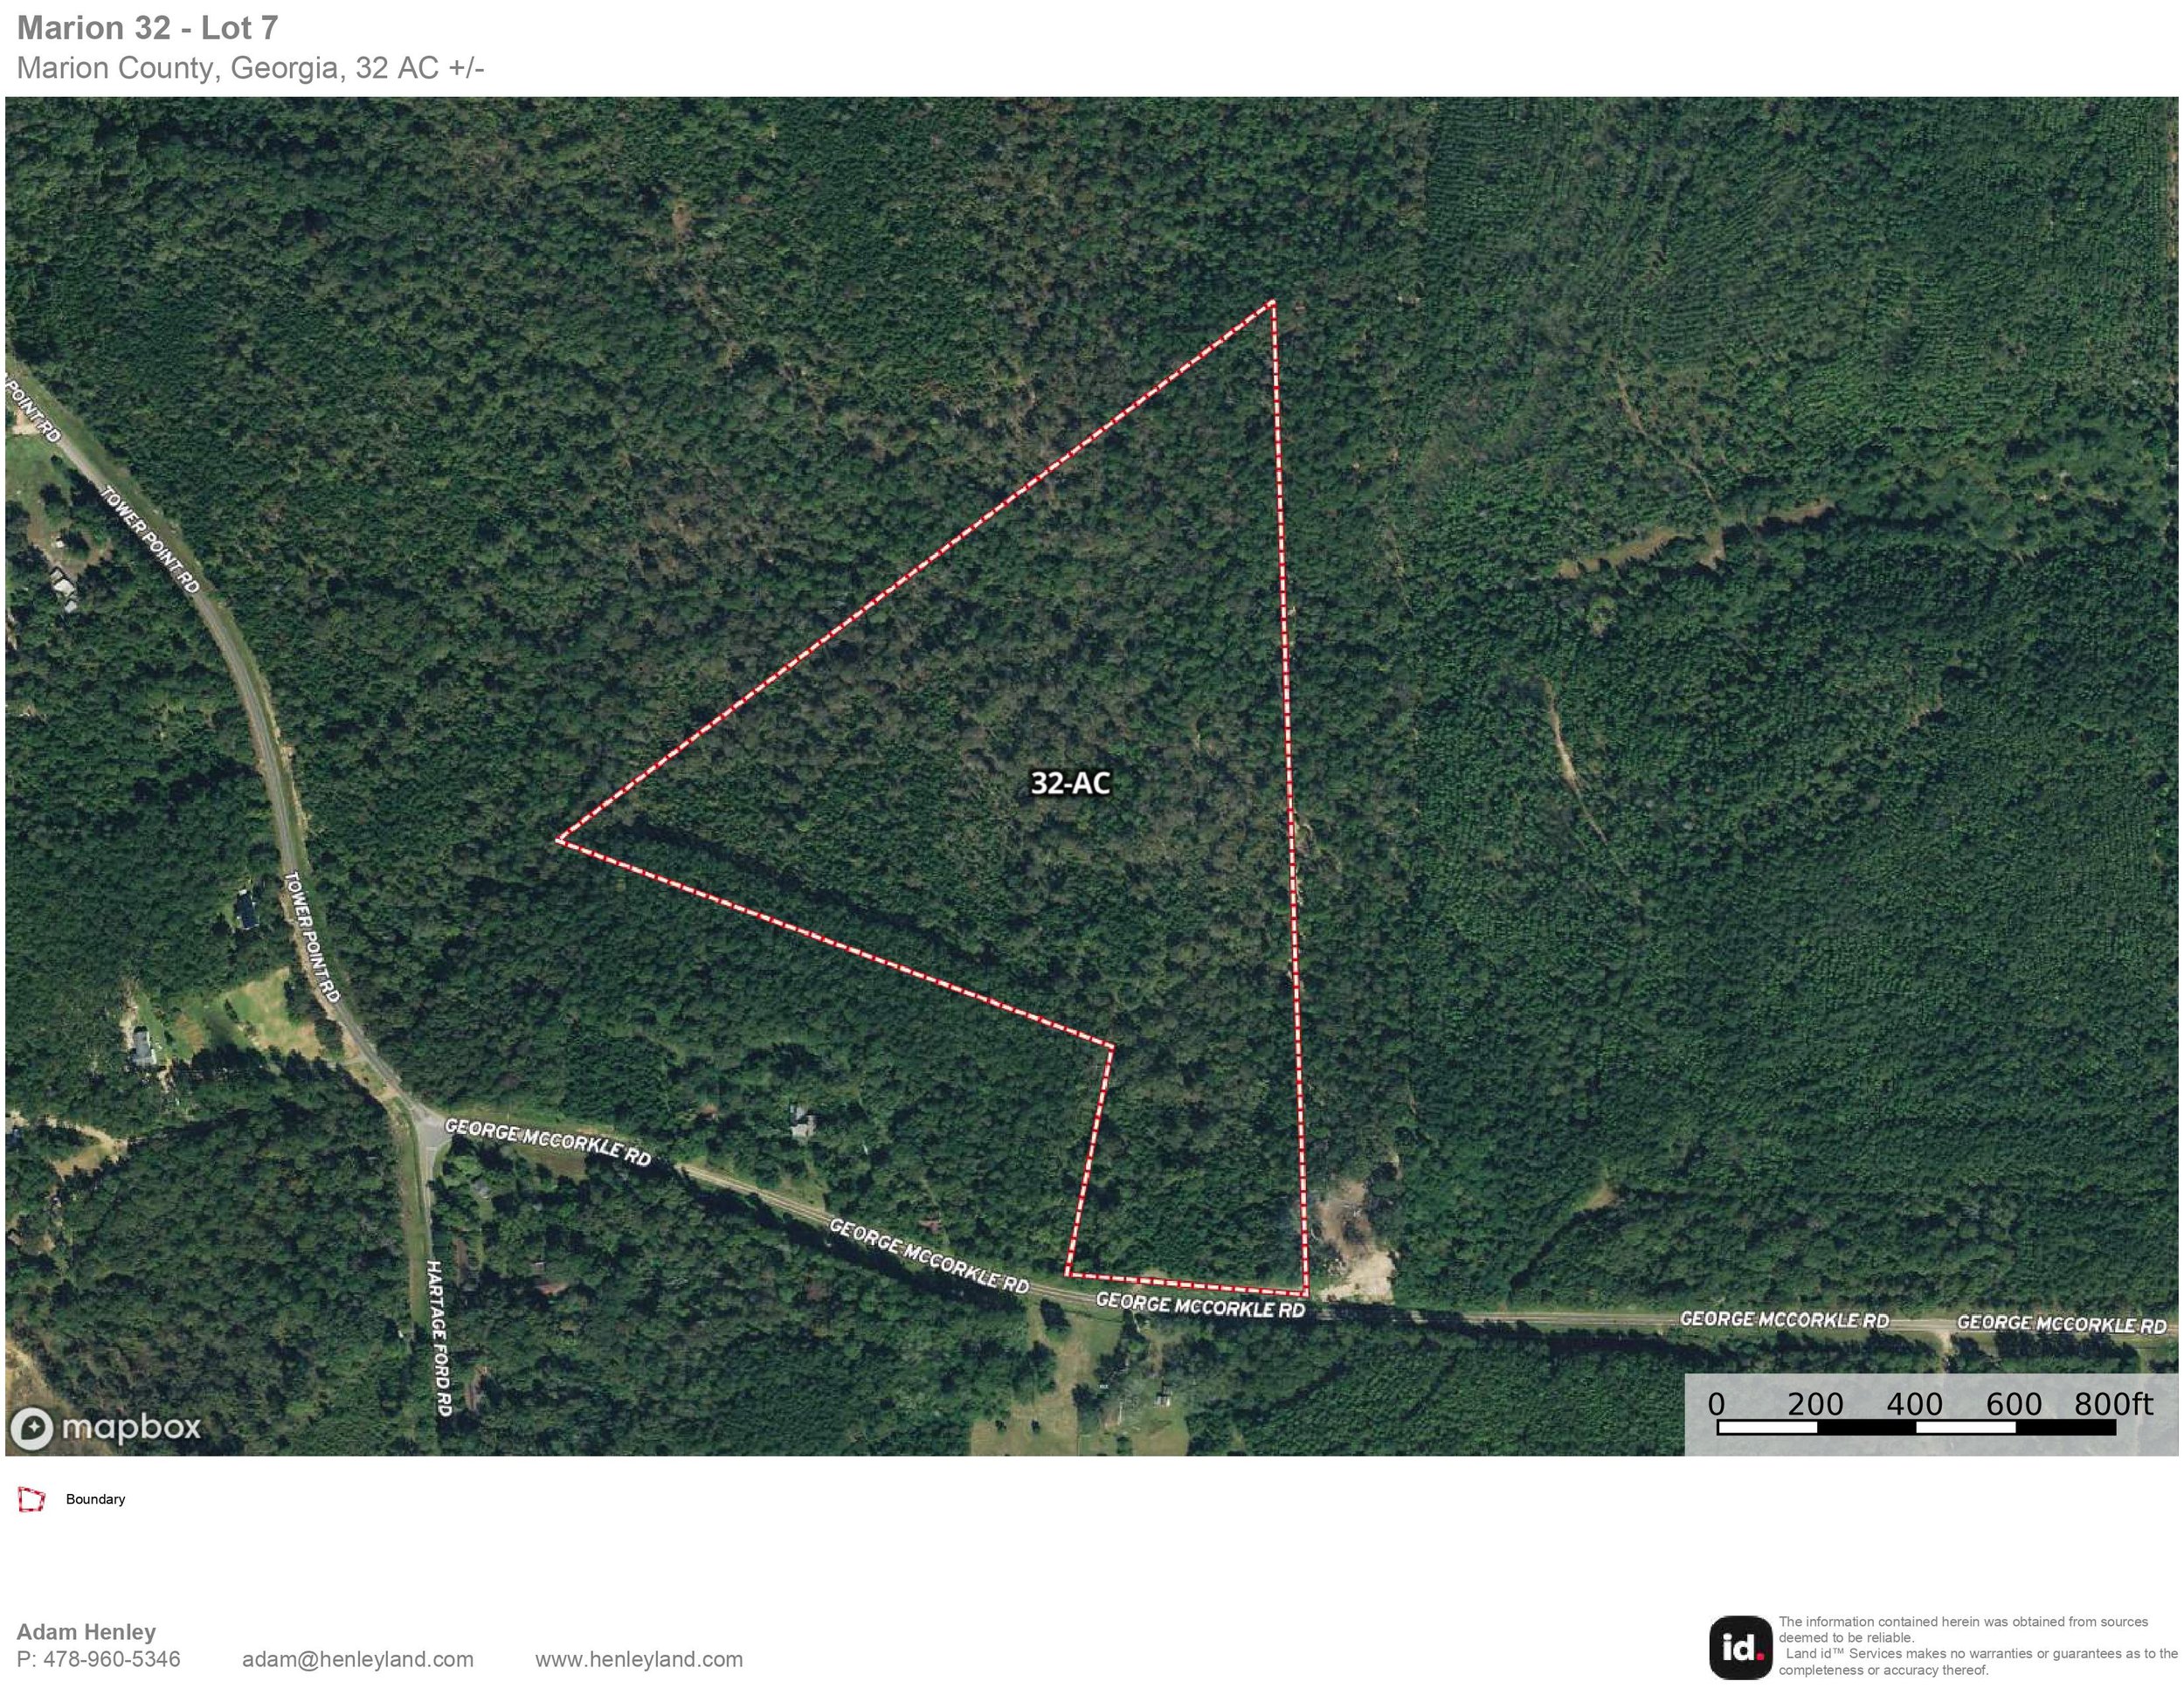 Marion 32 - Lot 7 - Aerial Map.jpg